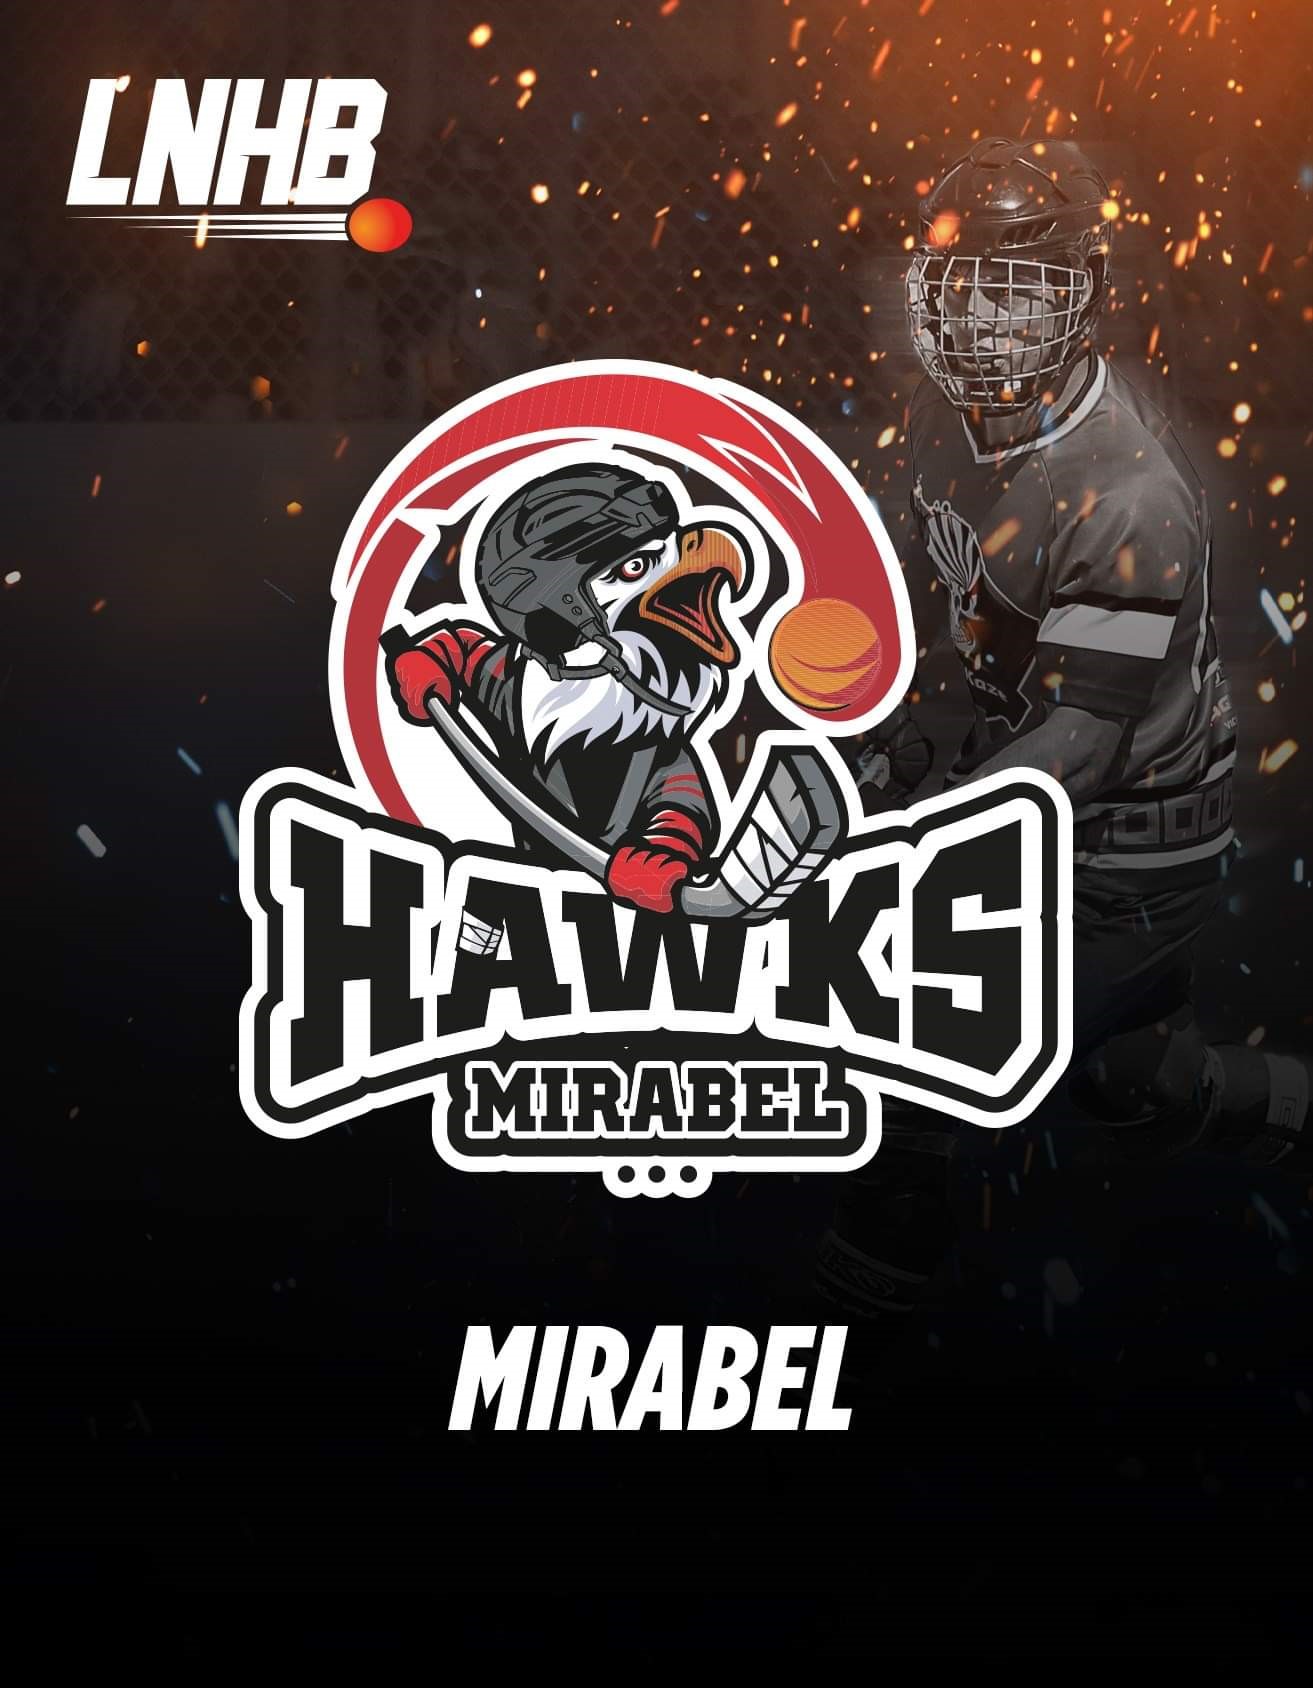 Logo Mirabel Lnhb 1